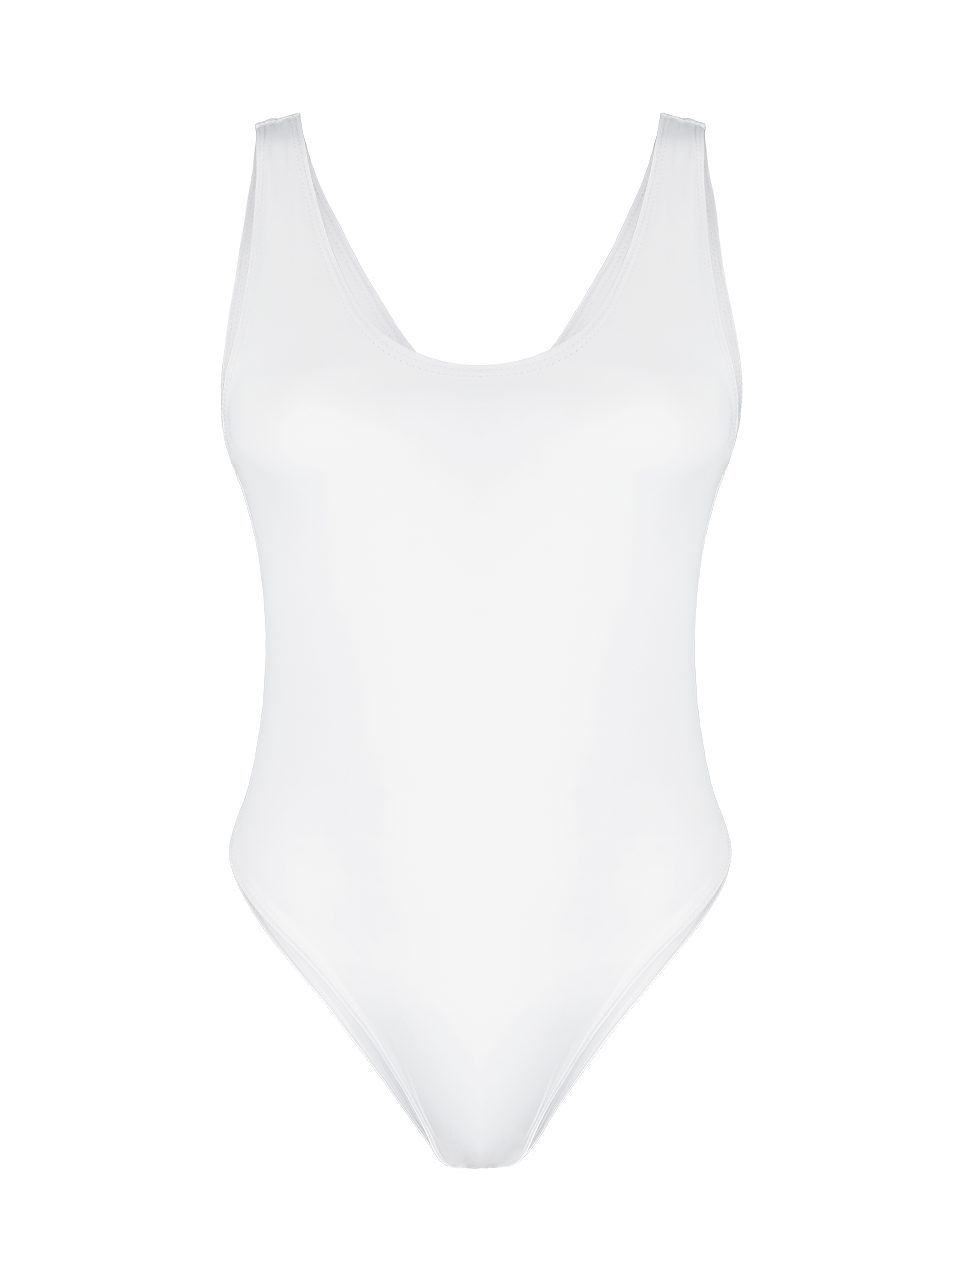 Personalized Custom Design One-piece Swimsuit Monokini 